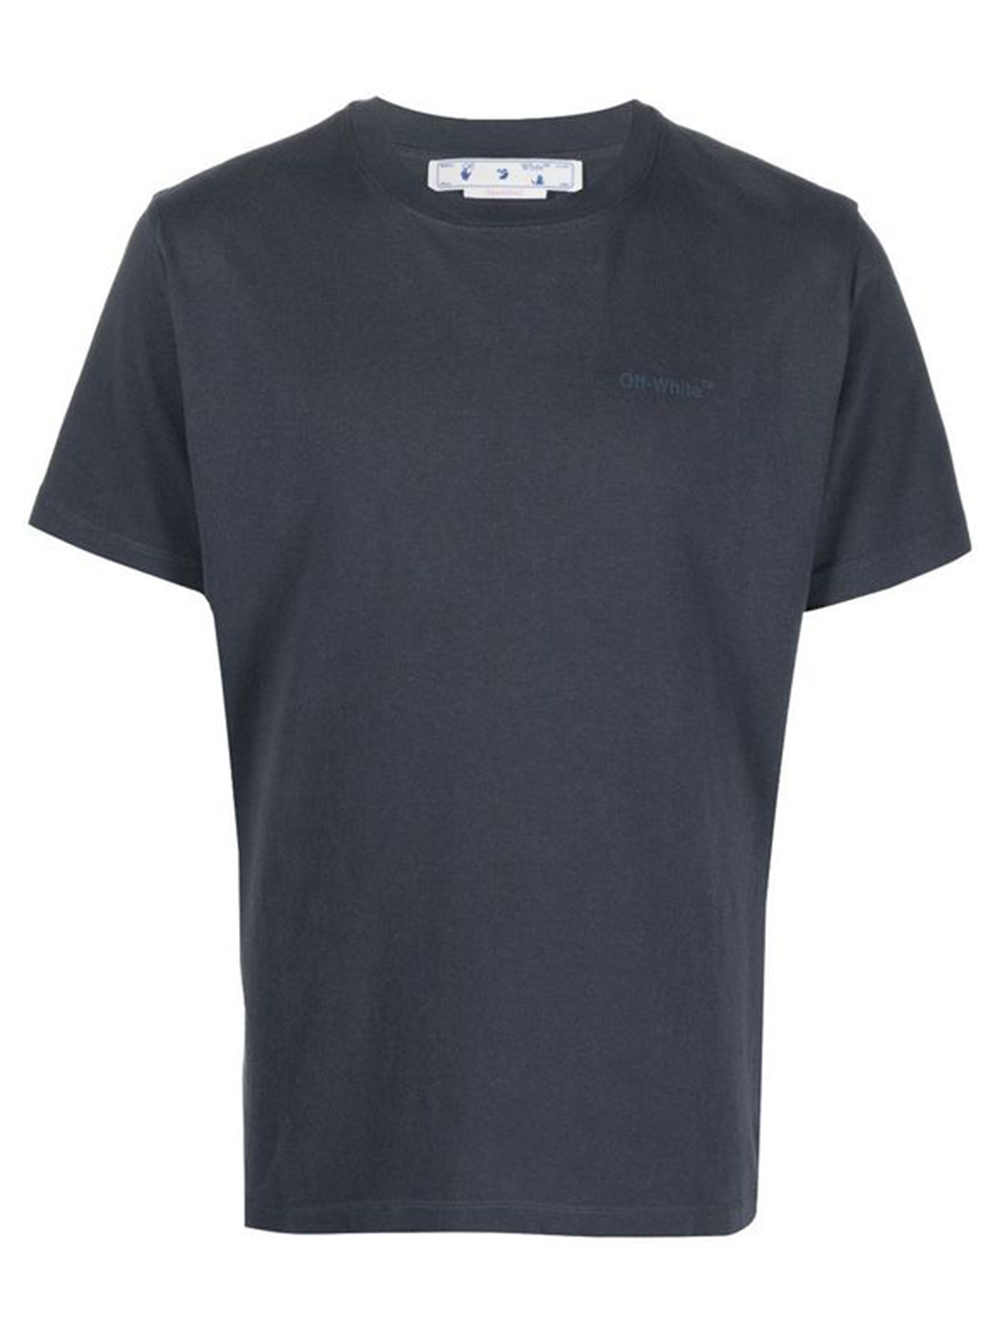 OFF-WHITE Two-Tone Striped Motif Diag Slim Fit T-Shirt Grey/Blue